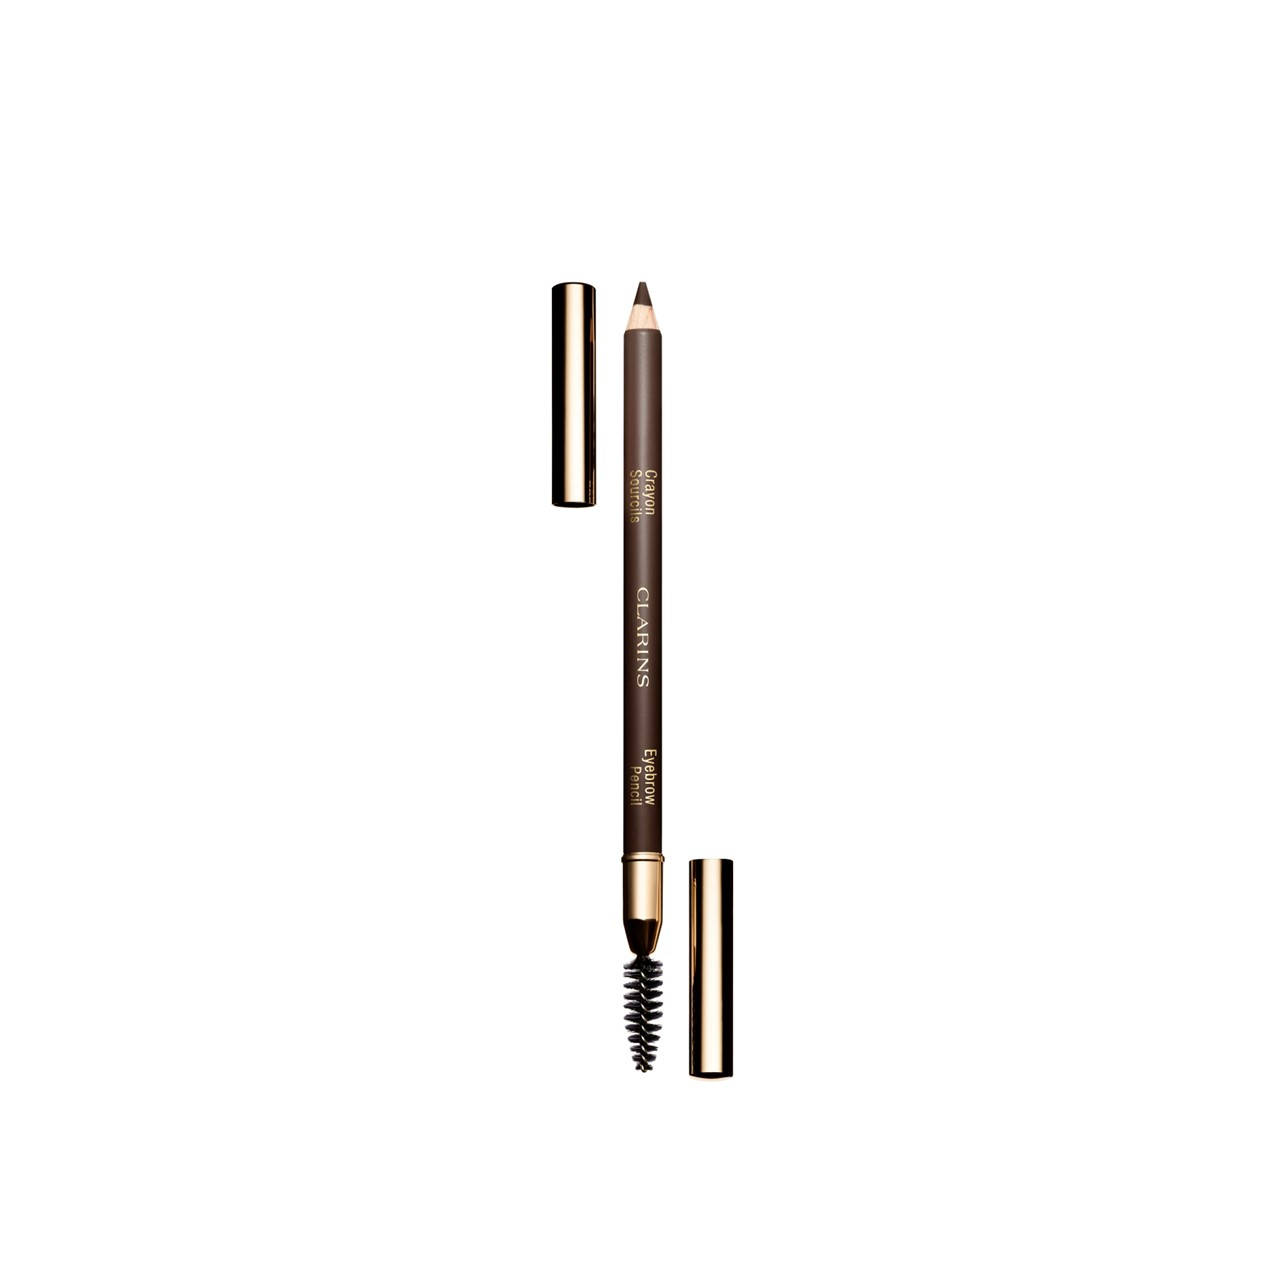 Clarins Eyebrow Pencil Long-Wearing 02 Light Brown 1.1g (0.04oz.)